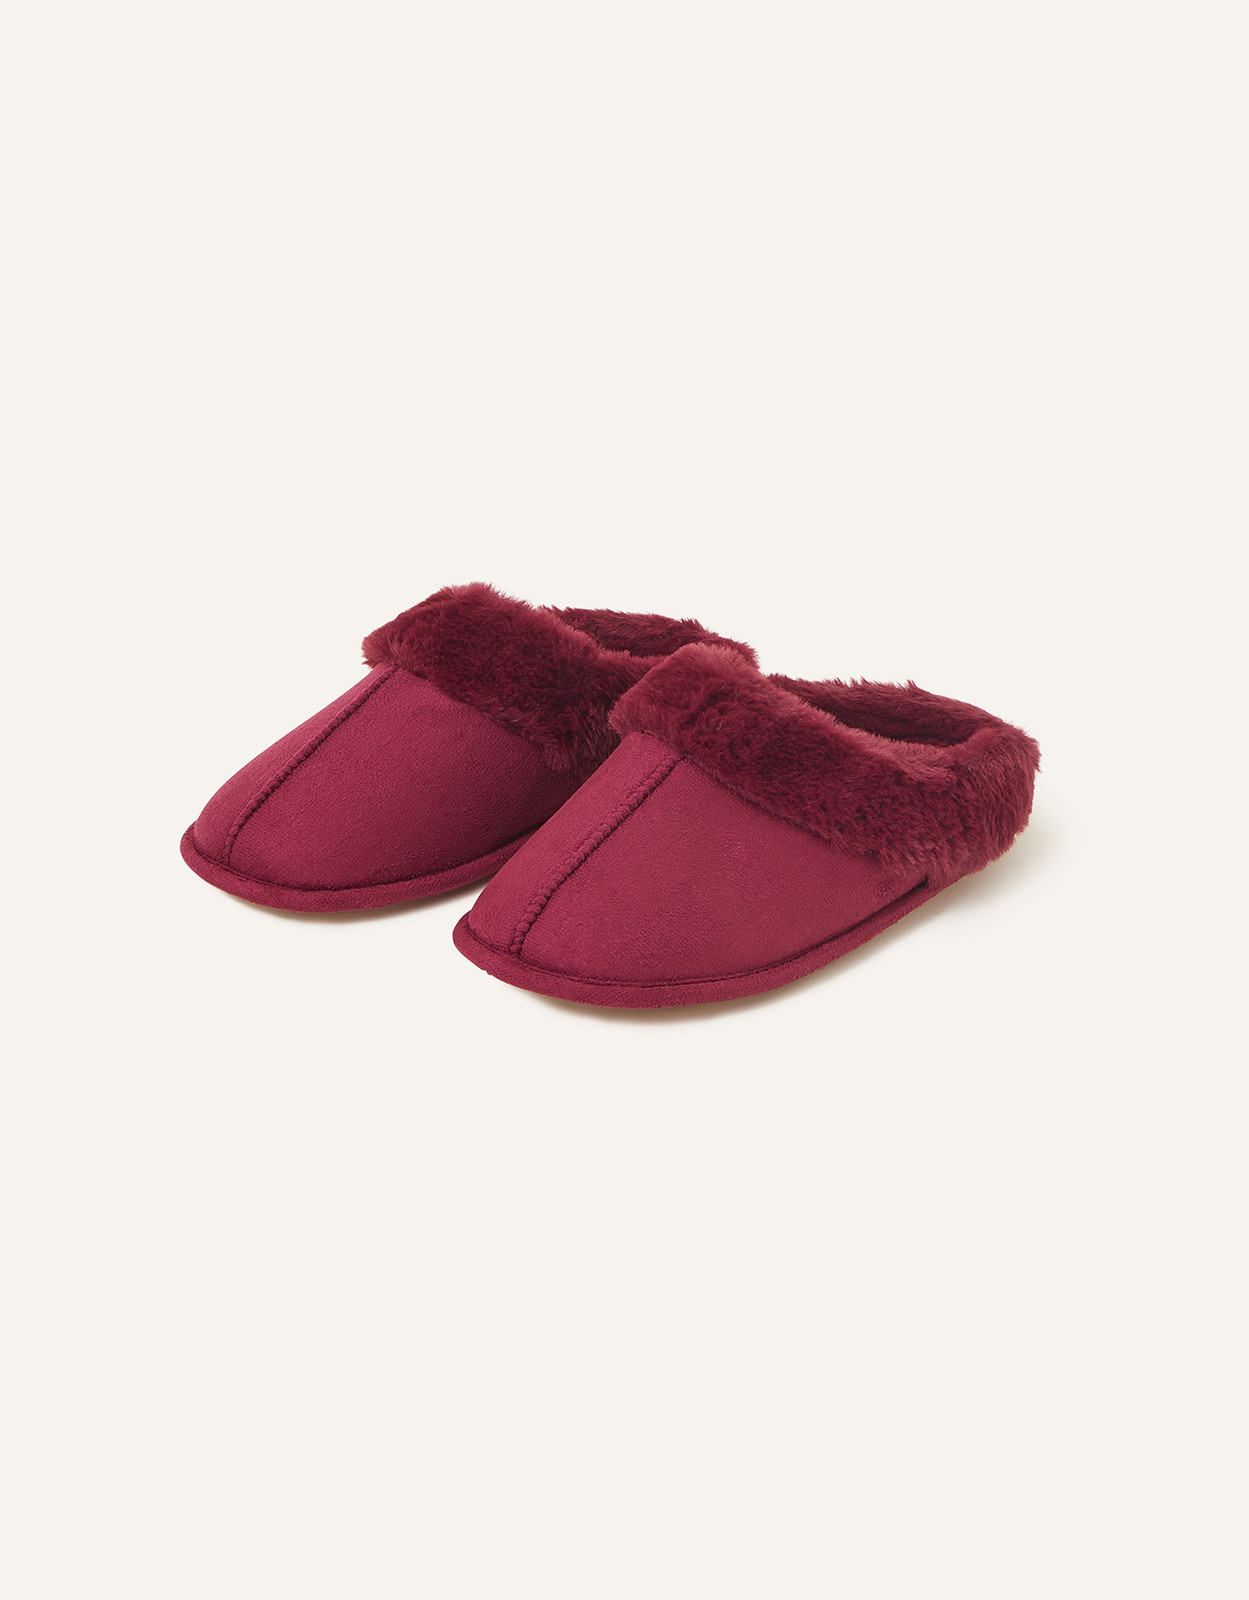 Accessorize Women's Faux Fur Mule Slippers Red, Size: M